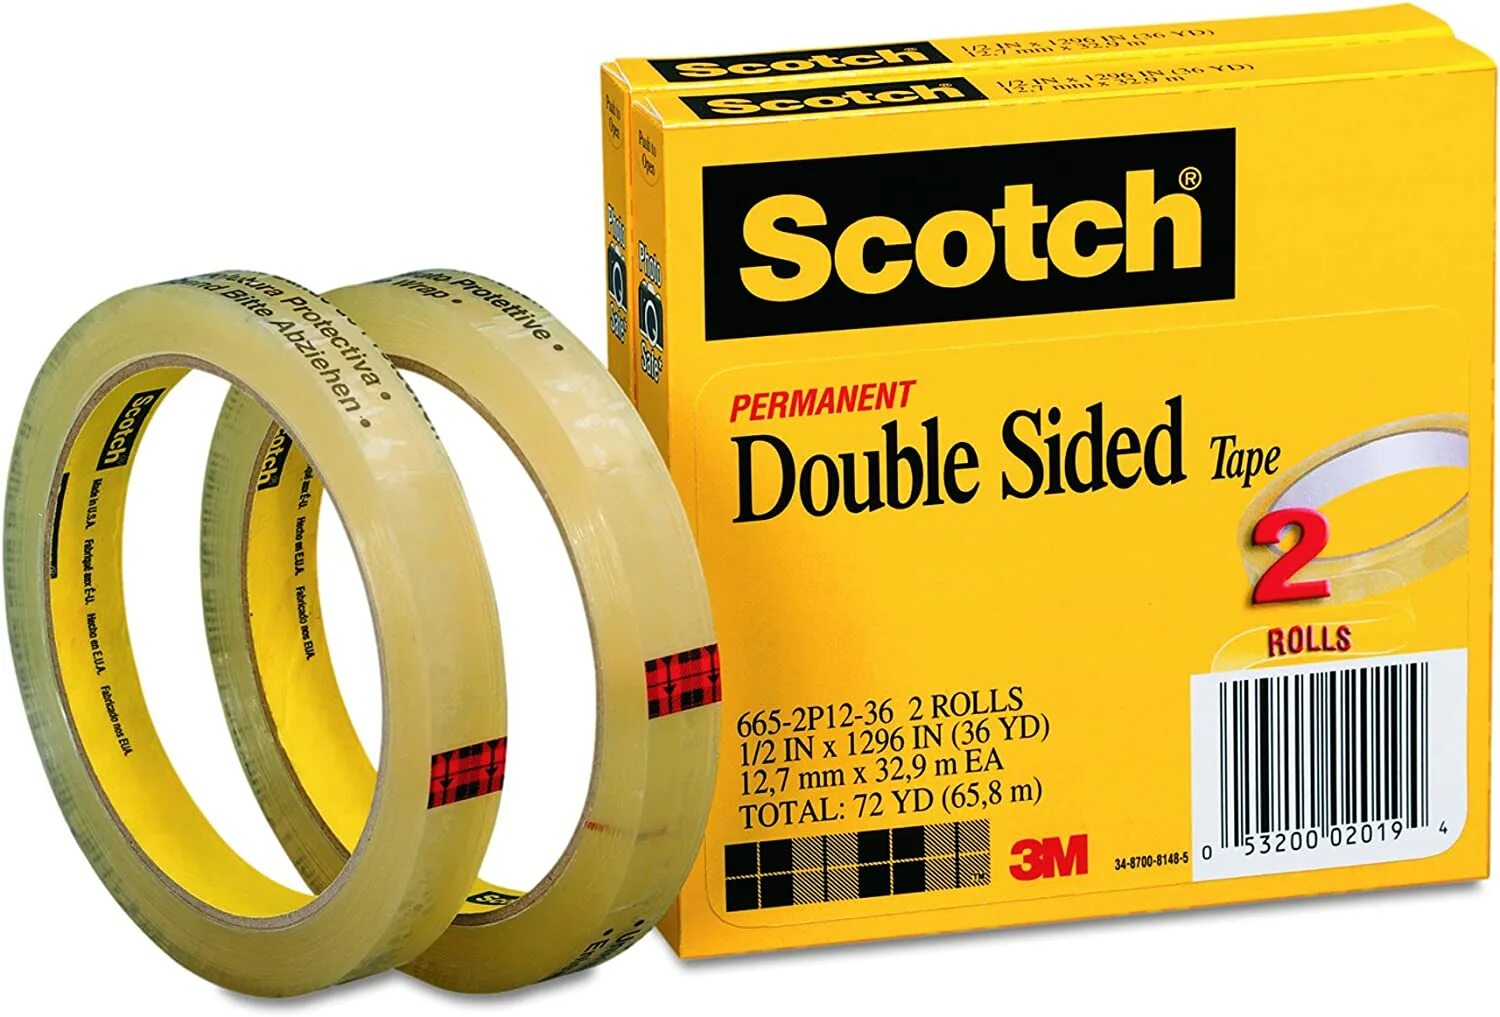 Scotch 3m permanent Double Sided Tape. Scotch Double Sided 3m. Scotch Double Sided Tape 1 SM. Scotch brand.